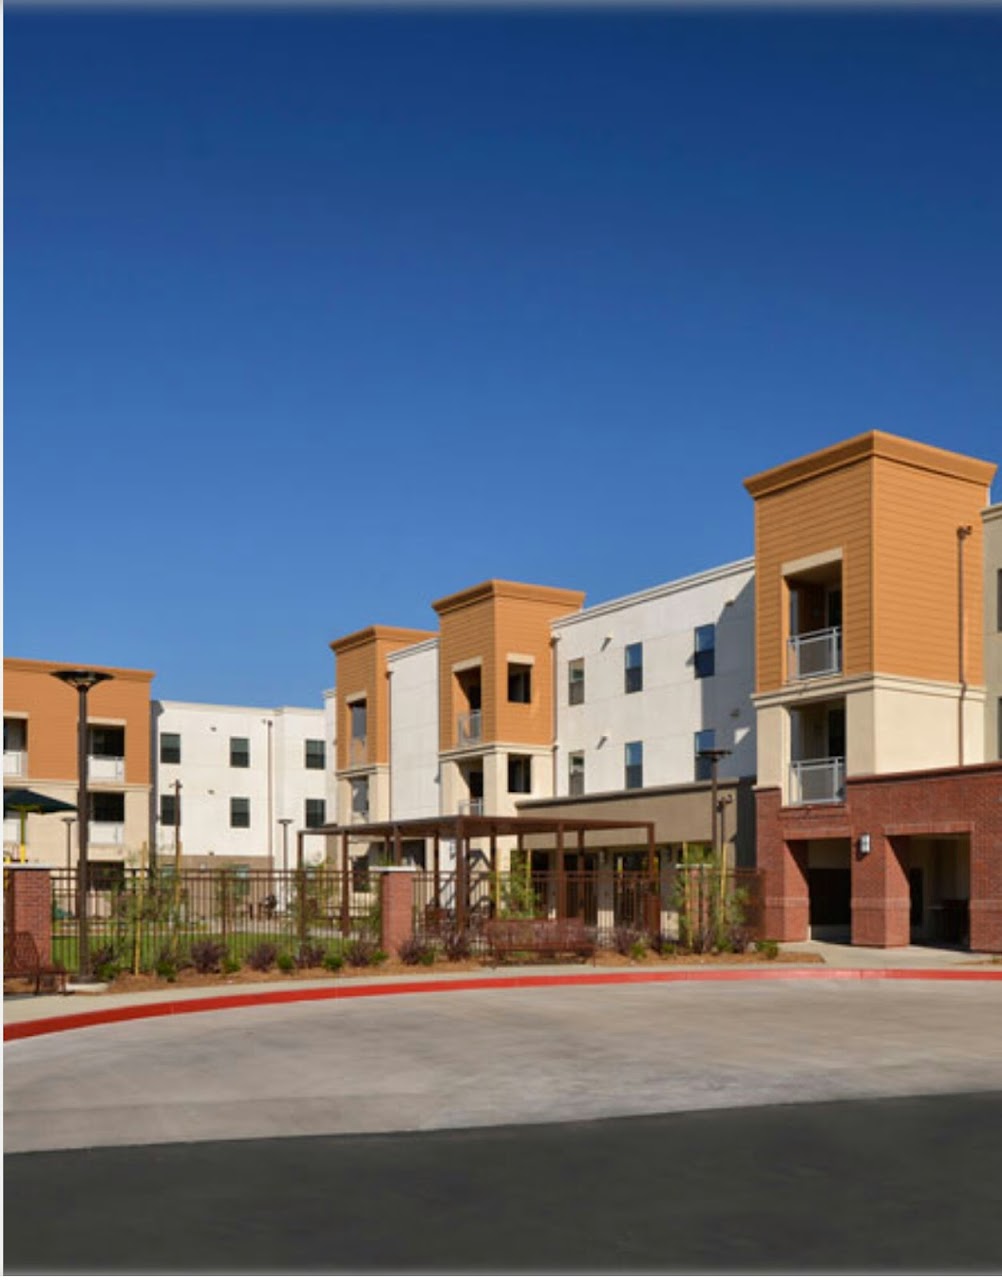 Photo of HOLT + HAMILTON FAMILY APARTMENTS. Affordable housing located at 934 W. HOLT AVENUE POMONA, CA 91768